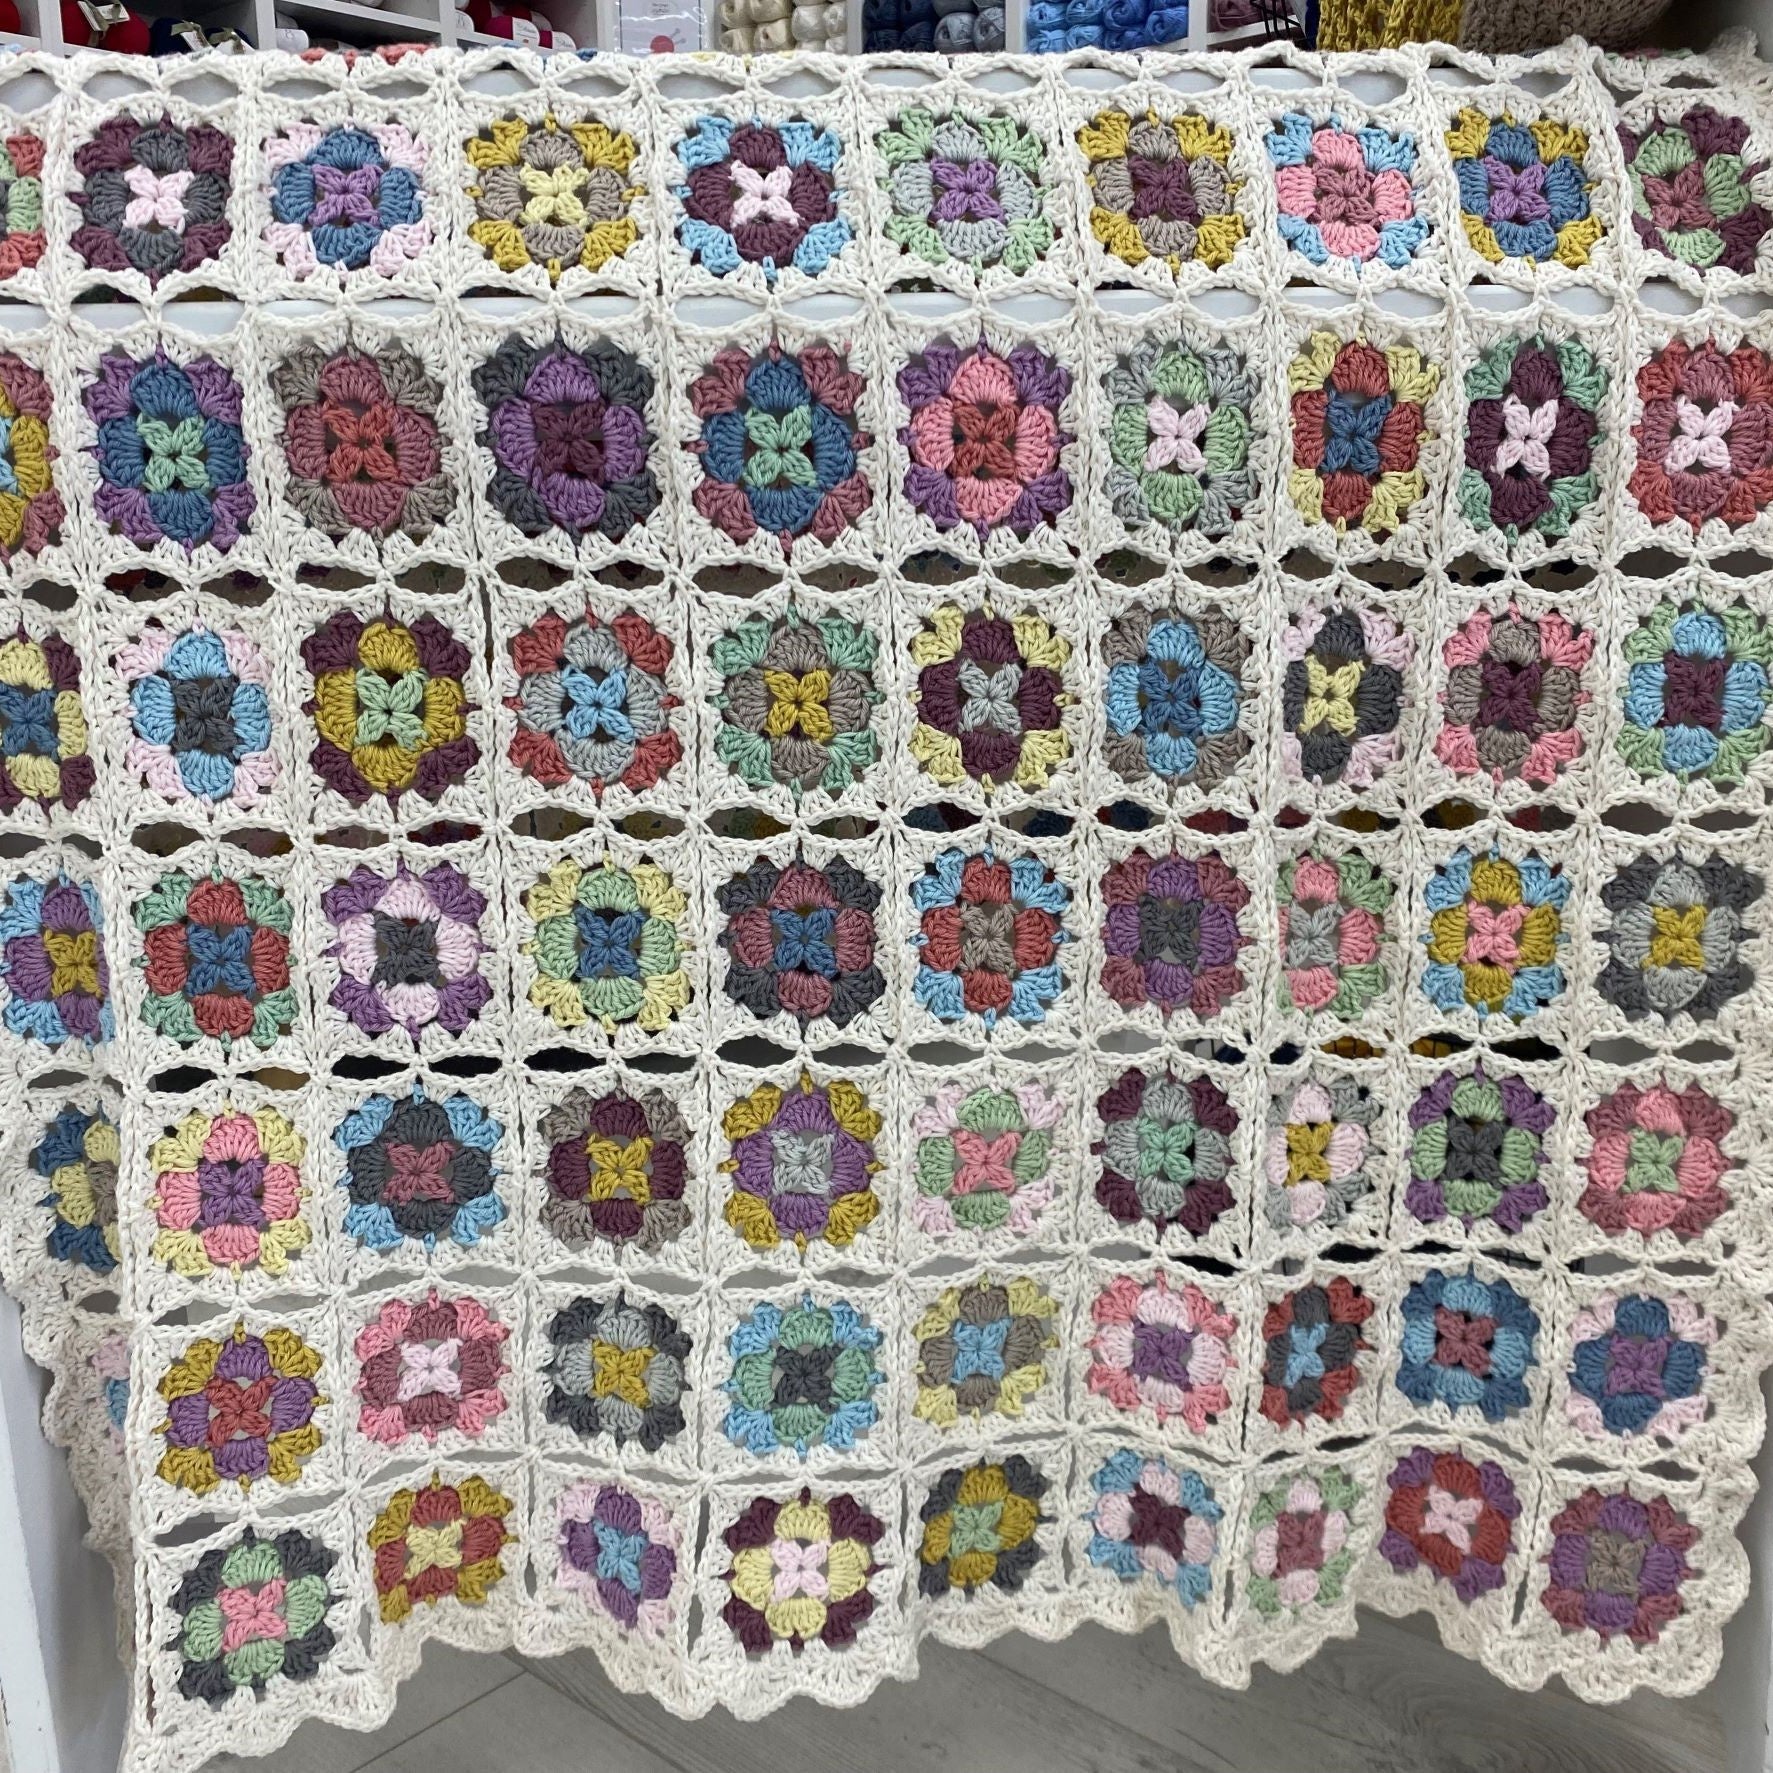 Dolly Mix Crochet Blanket Pattern